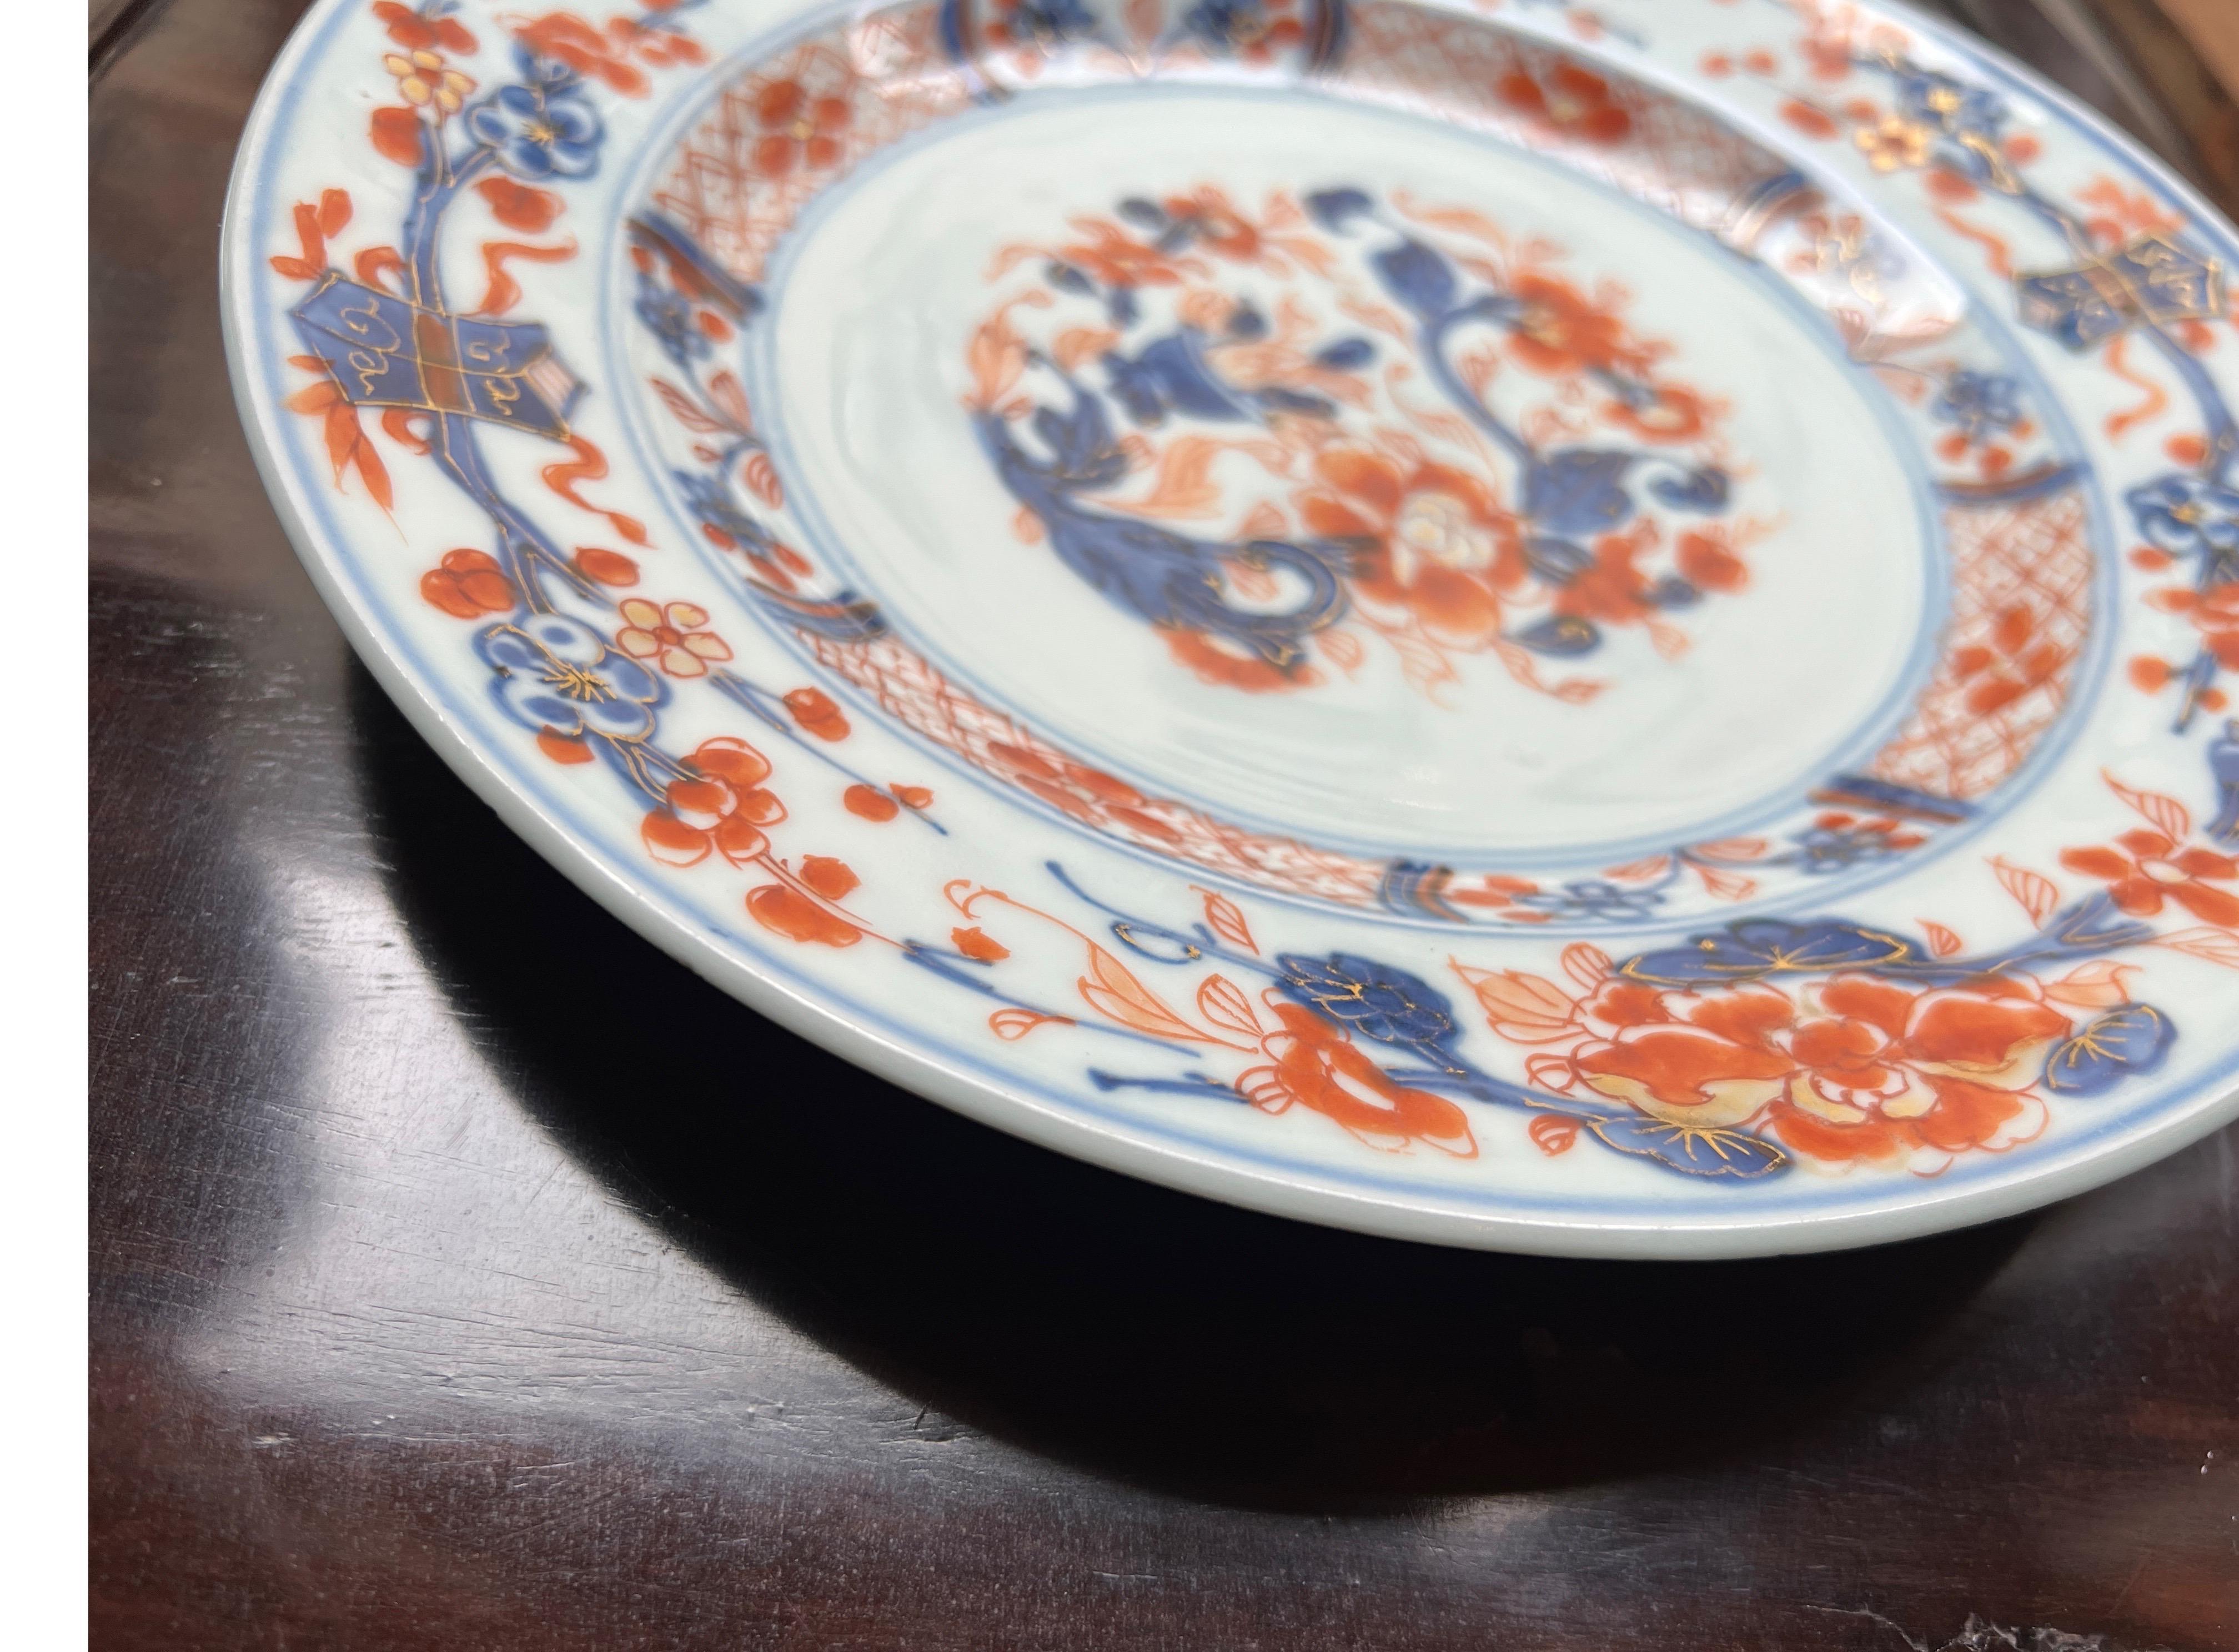 China, 18th Century Chinese Export Imari Porcelain Plate with vase pattern 1710 8